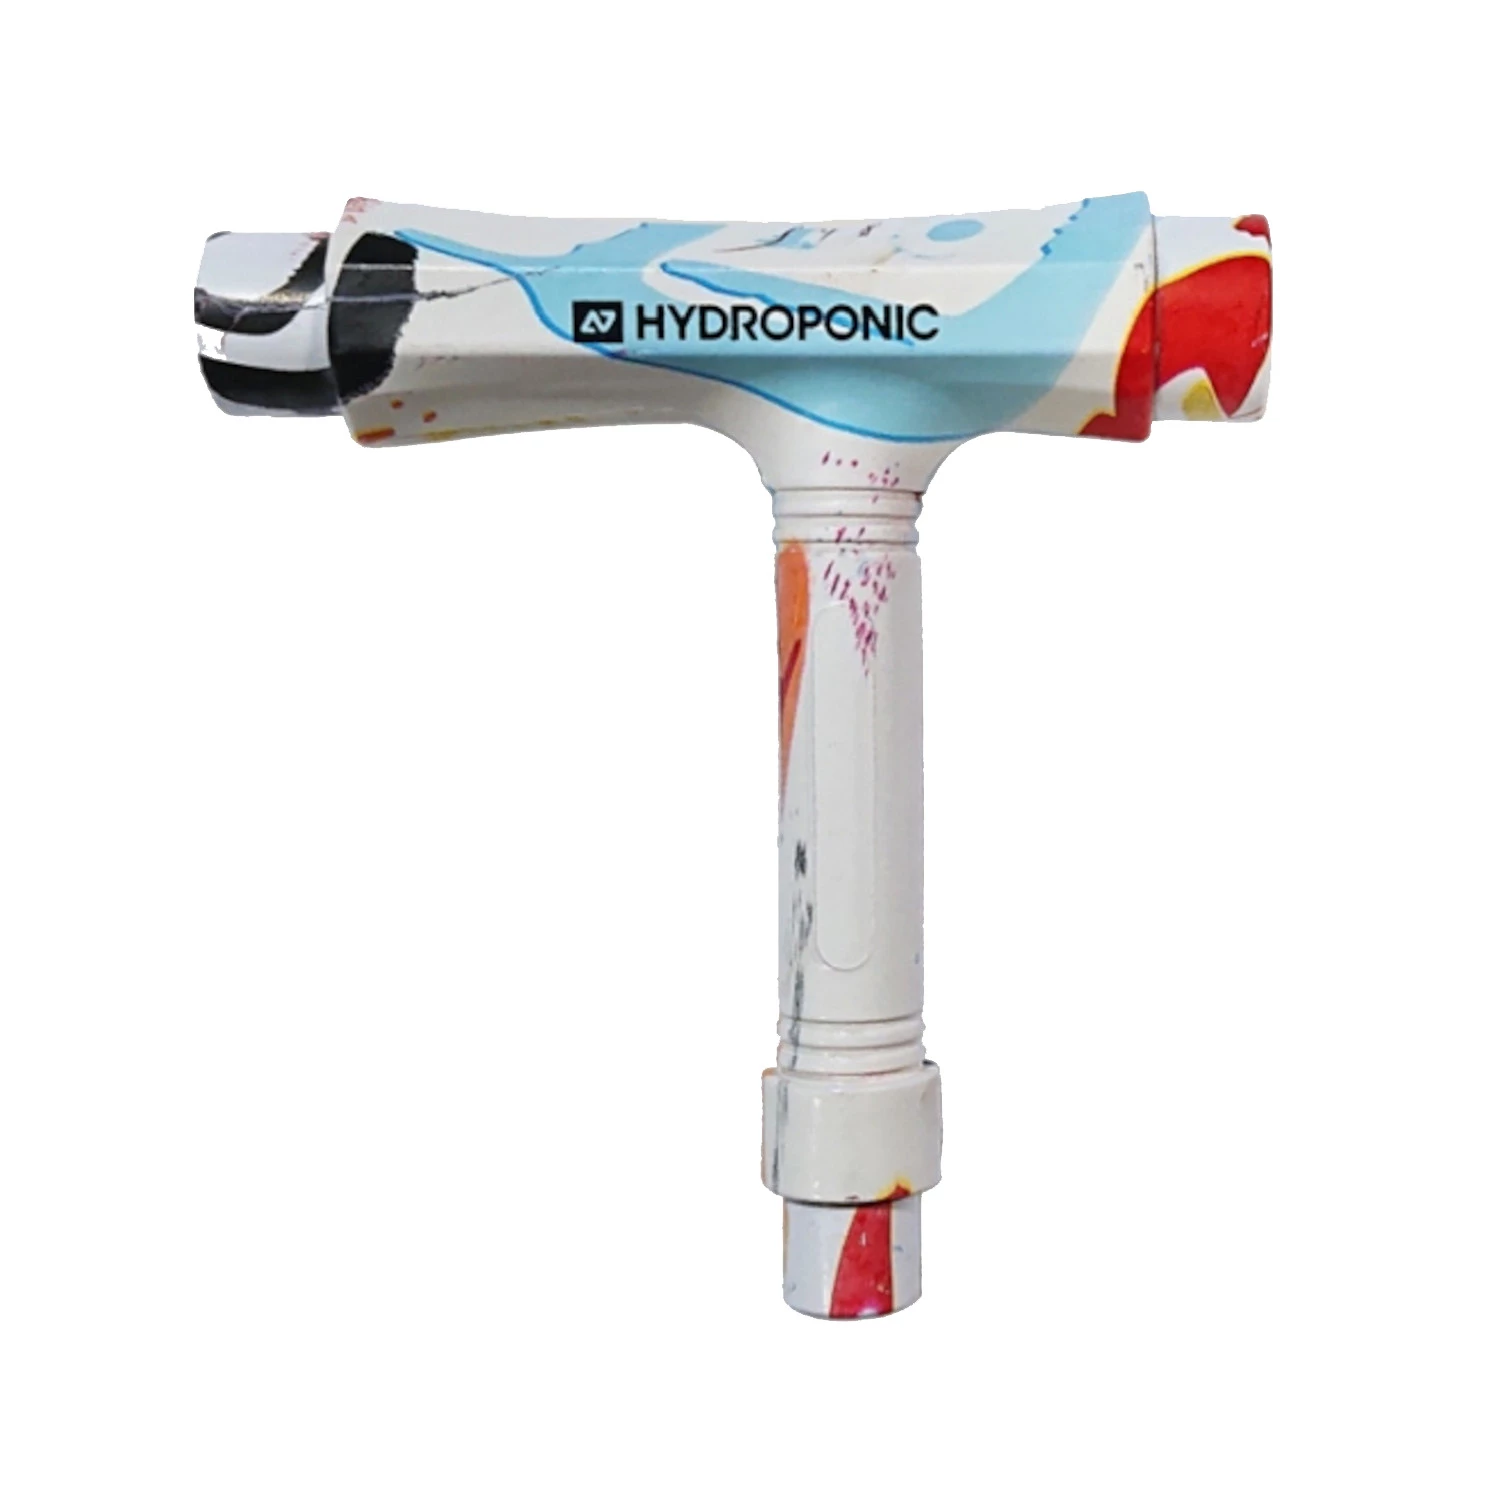 Hydroponic T tools